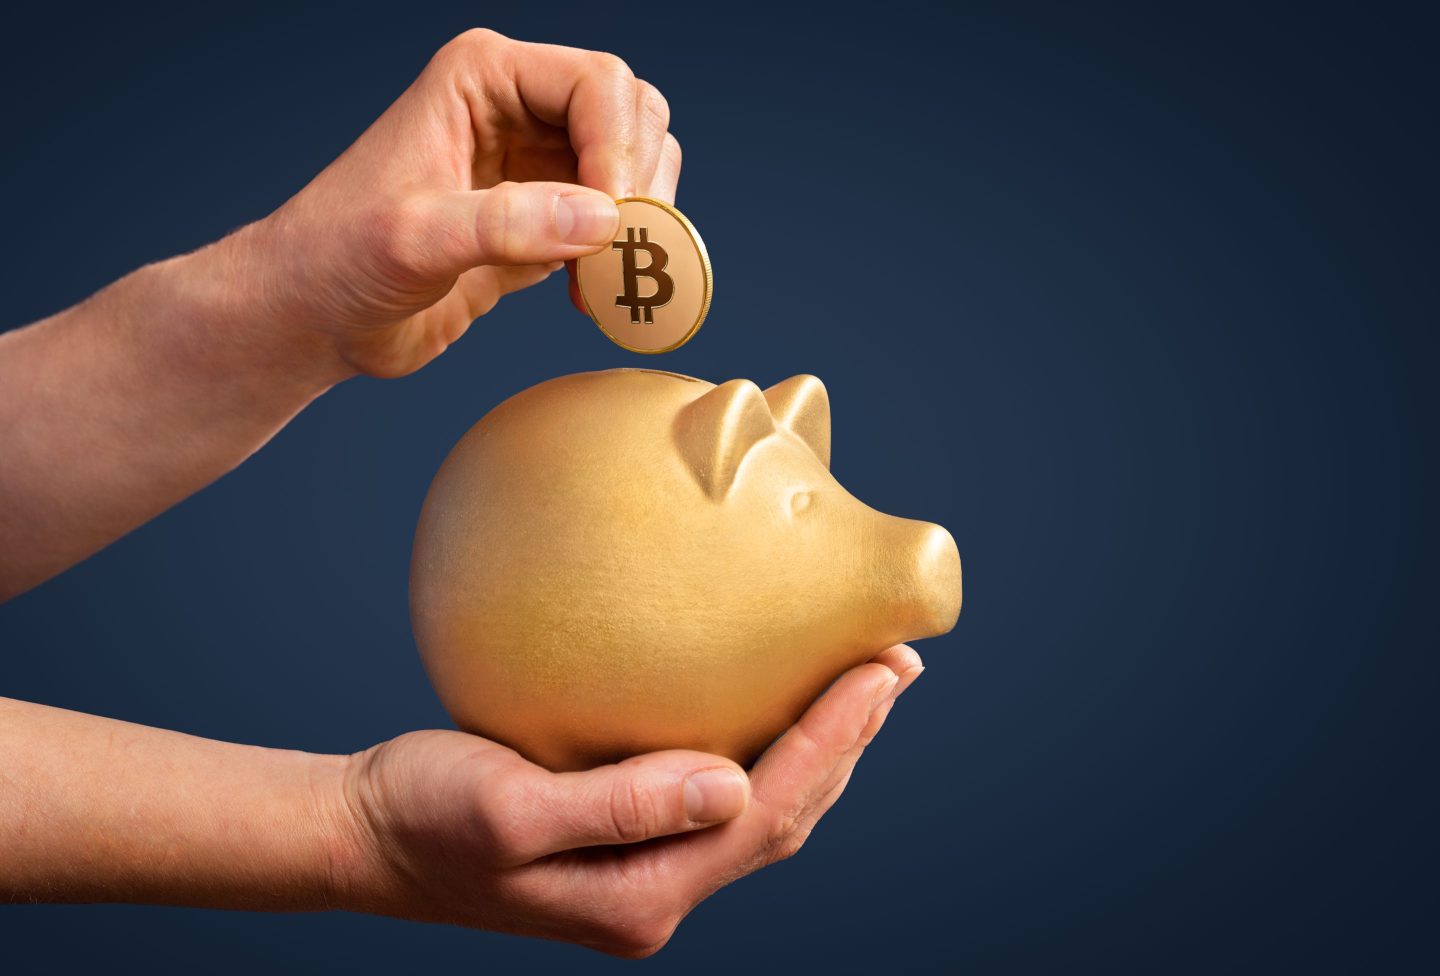 A person putting a Bitcoin into a gold piggy bank.